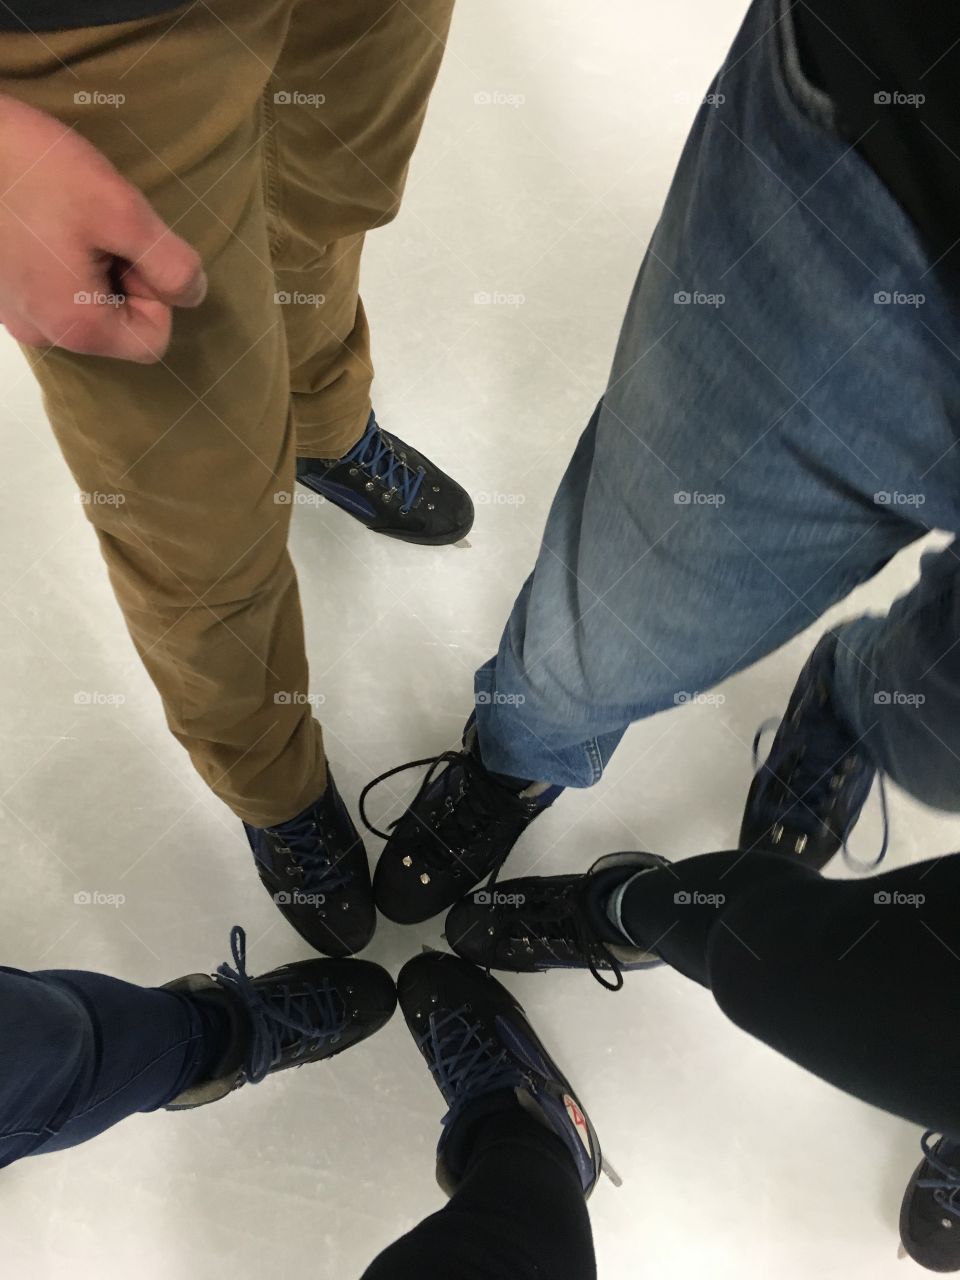 Five ice skating 